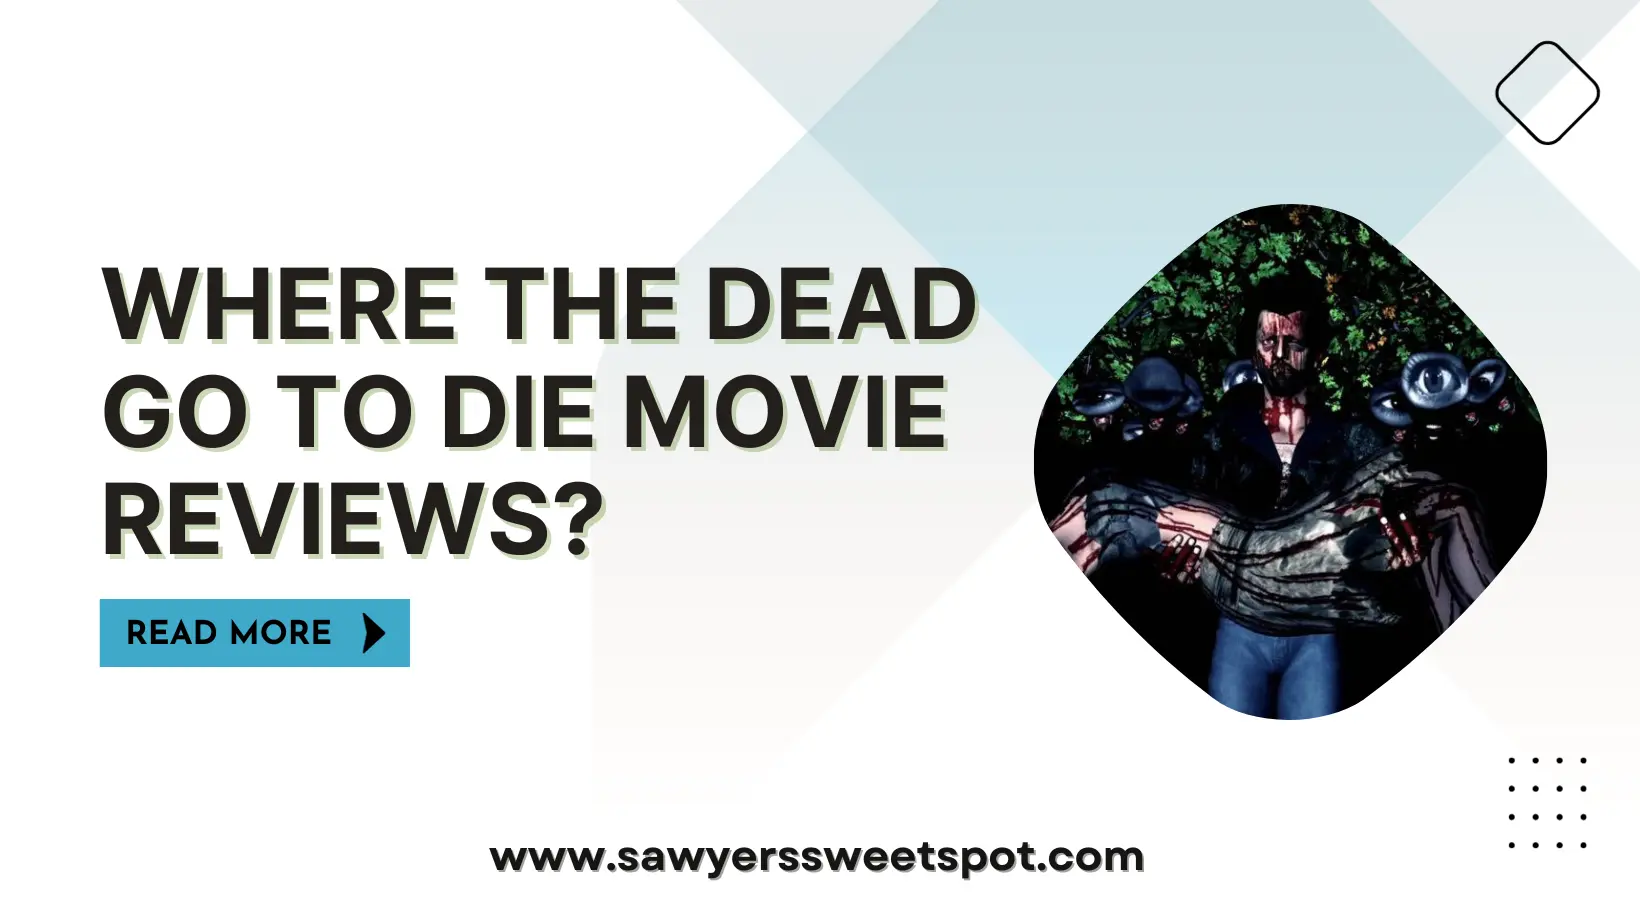 Where the Dead Go to Die Movie Reviews?